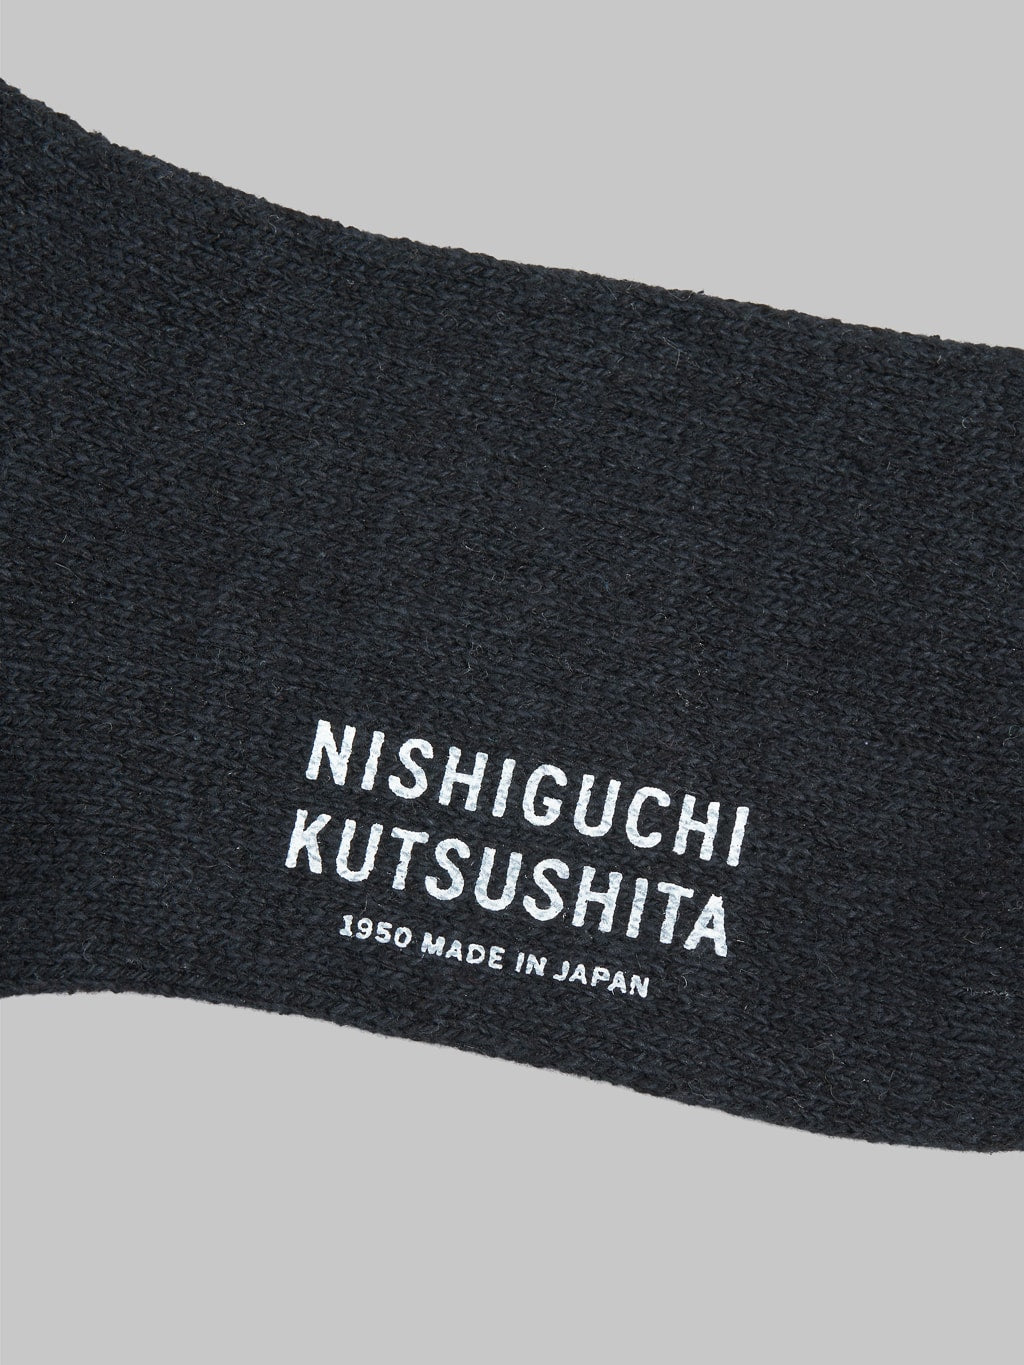 Nishiguchi Kutsushita Silk Cotton Socks Black Brand Logo